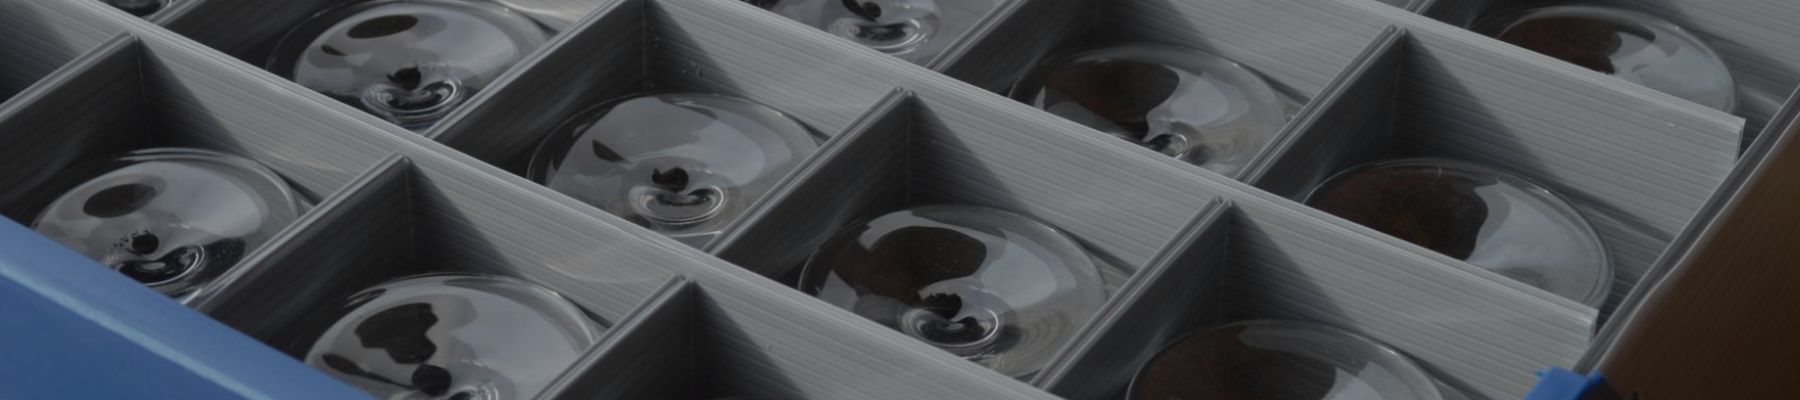 Glassjacks - Glassware Storage Boxes and Crates II